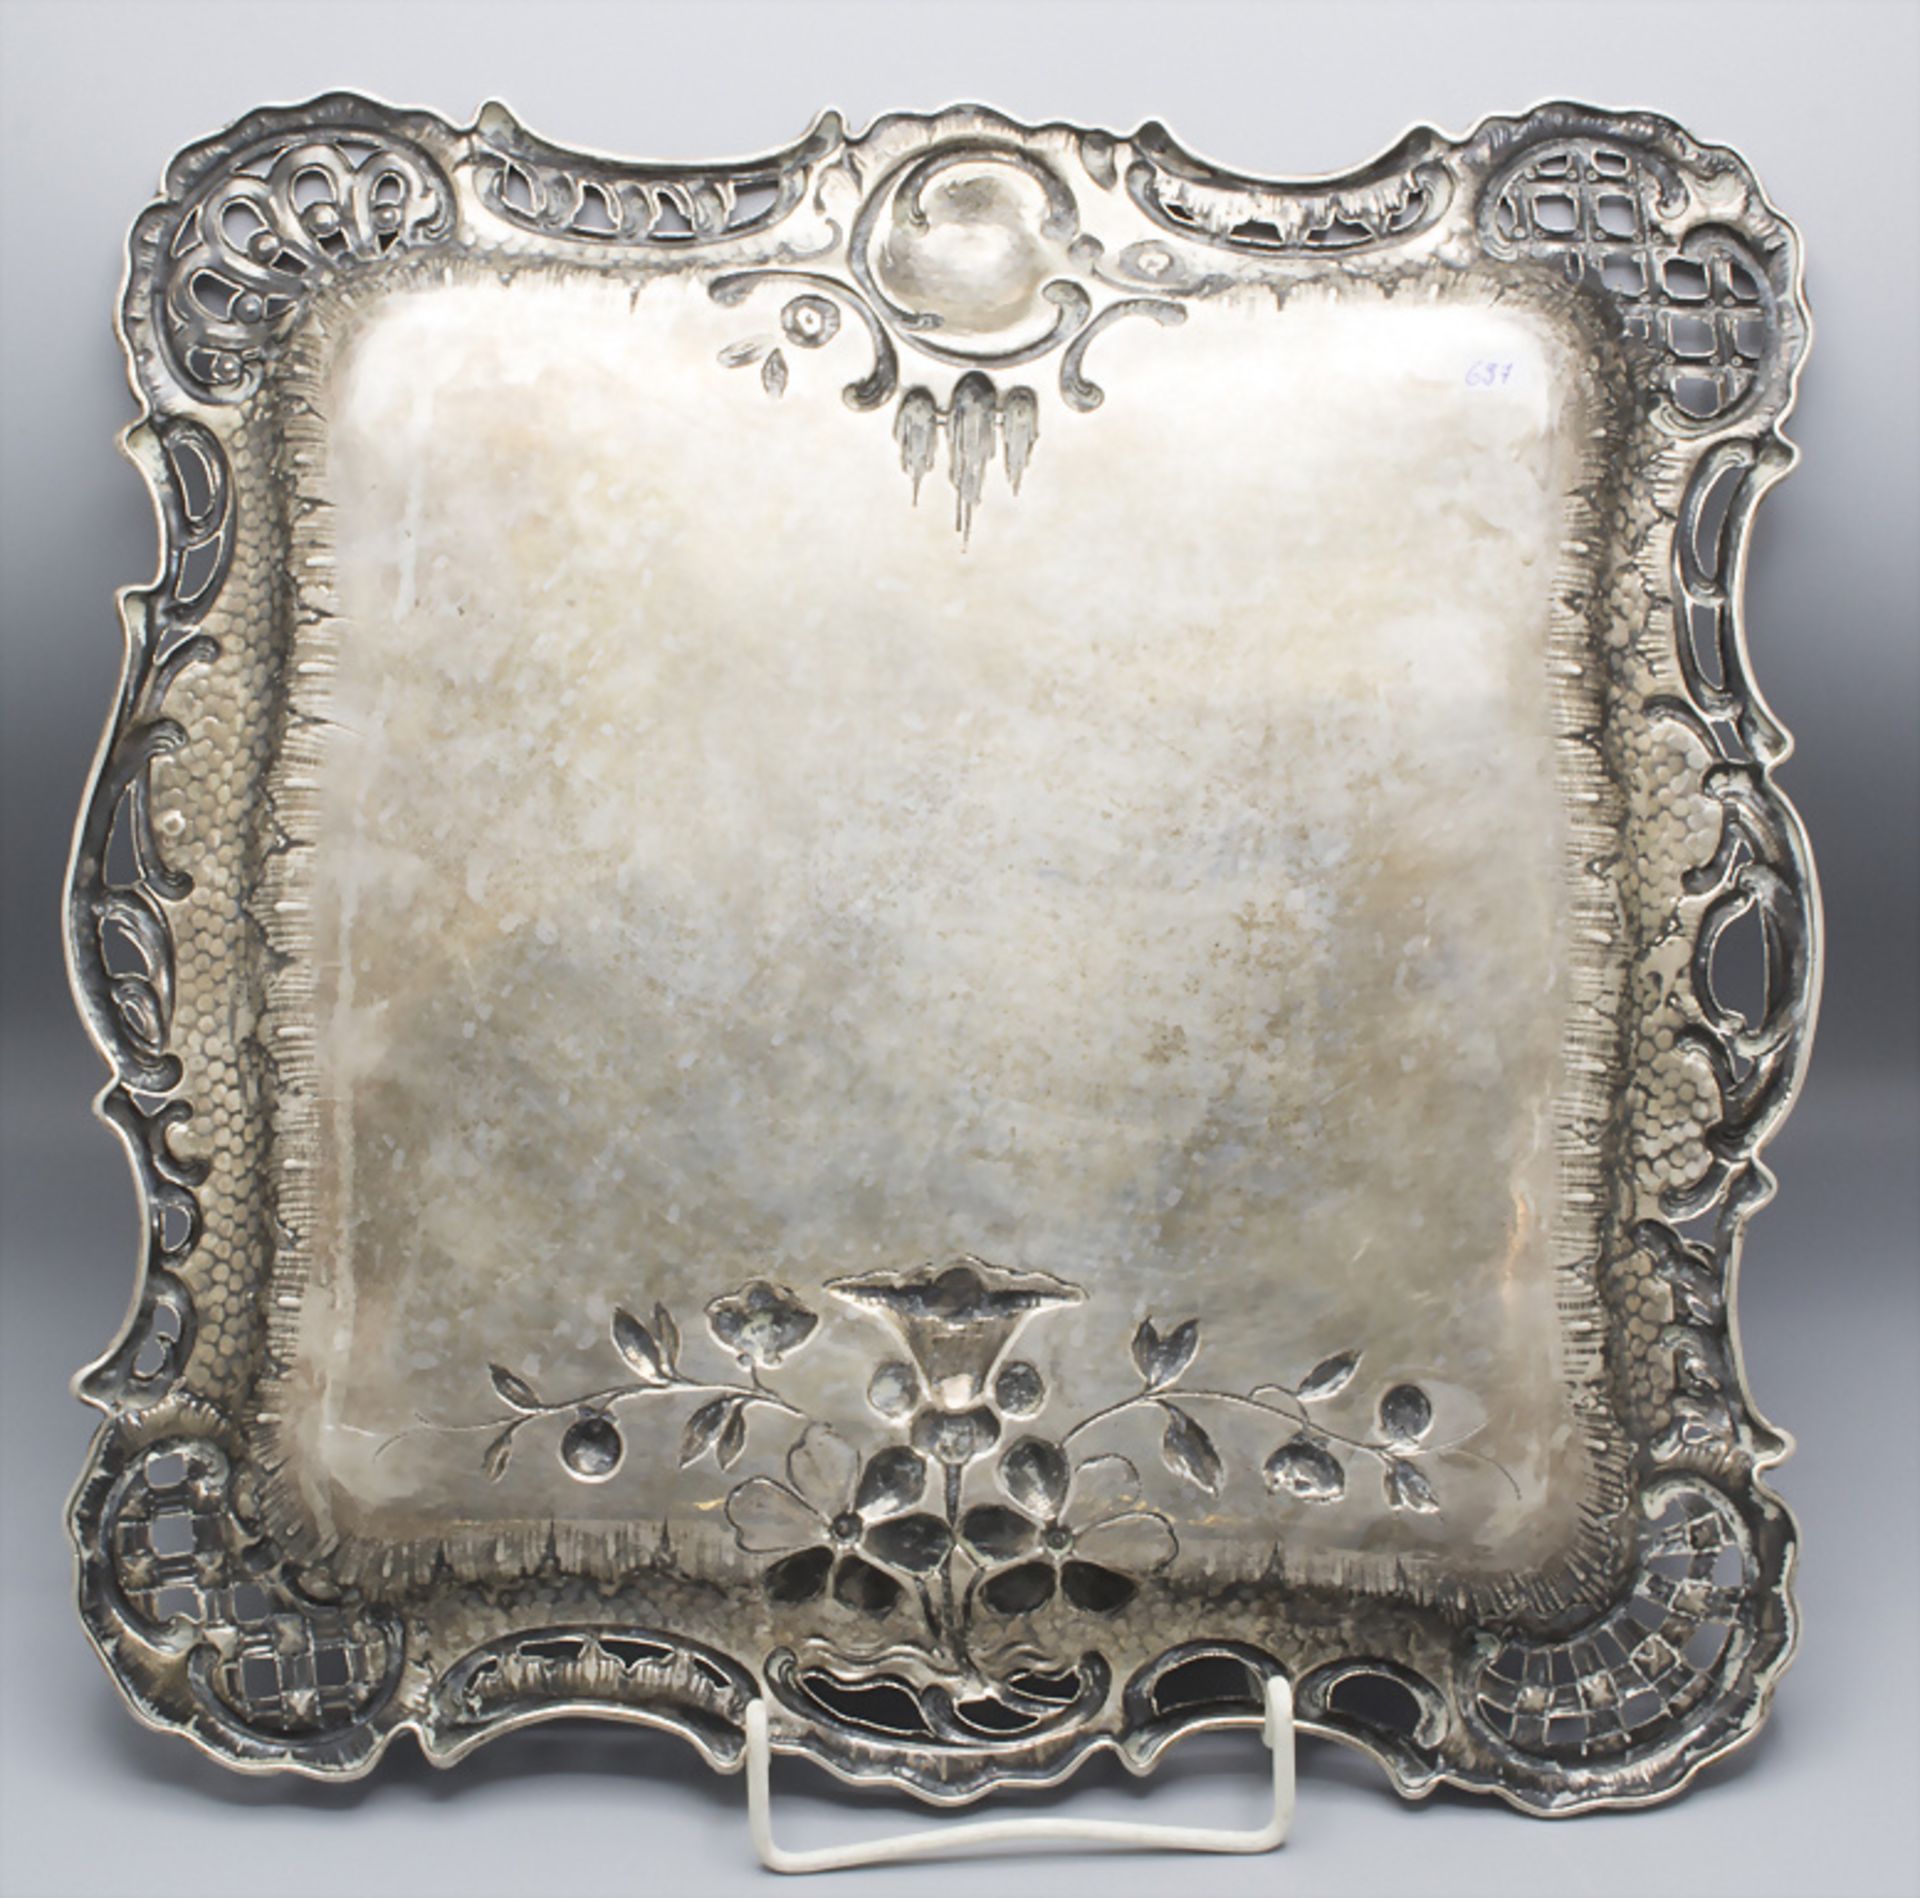 Tablett / Plateau en argent massif / A silver tray, E. Fleischmann, Wien, nach 1868 - Bild 4 aus 5